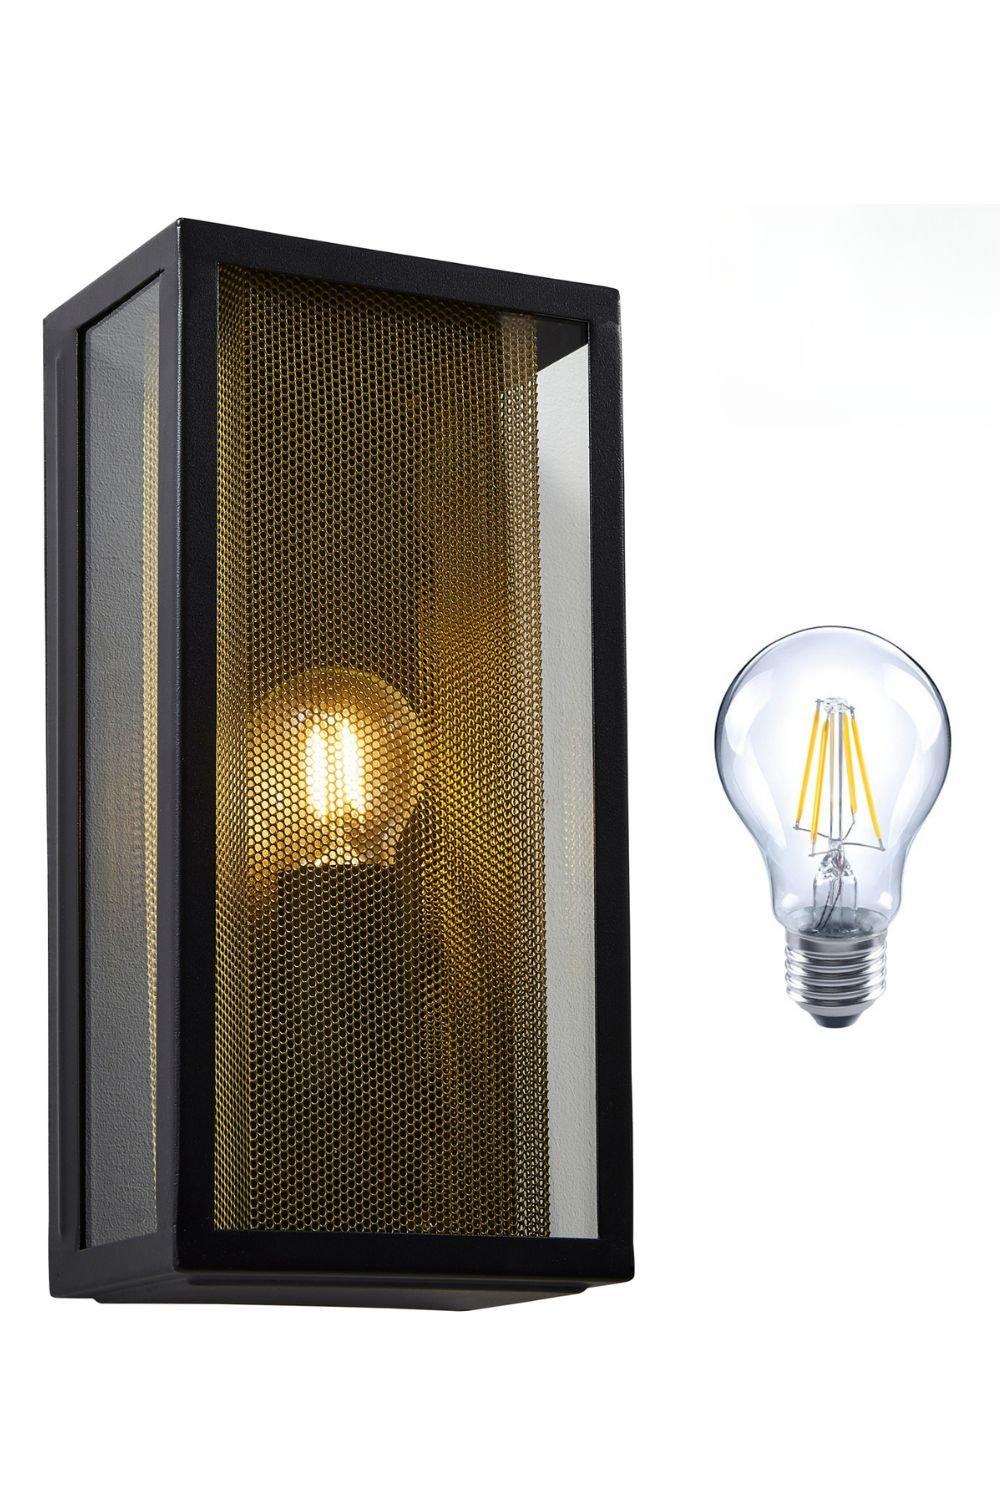 Box Lantern Wall Light - Mesh Insert and LED Bulb - Black with Brass Insert